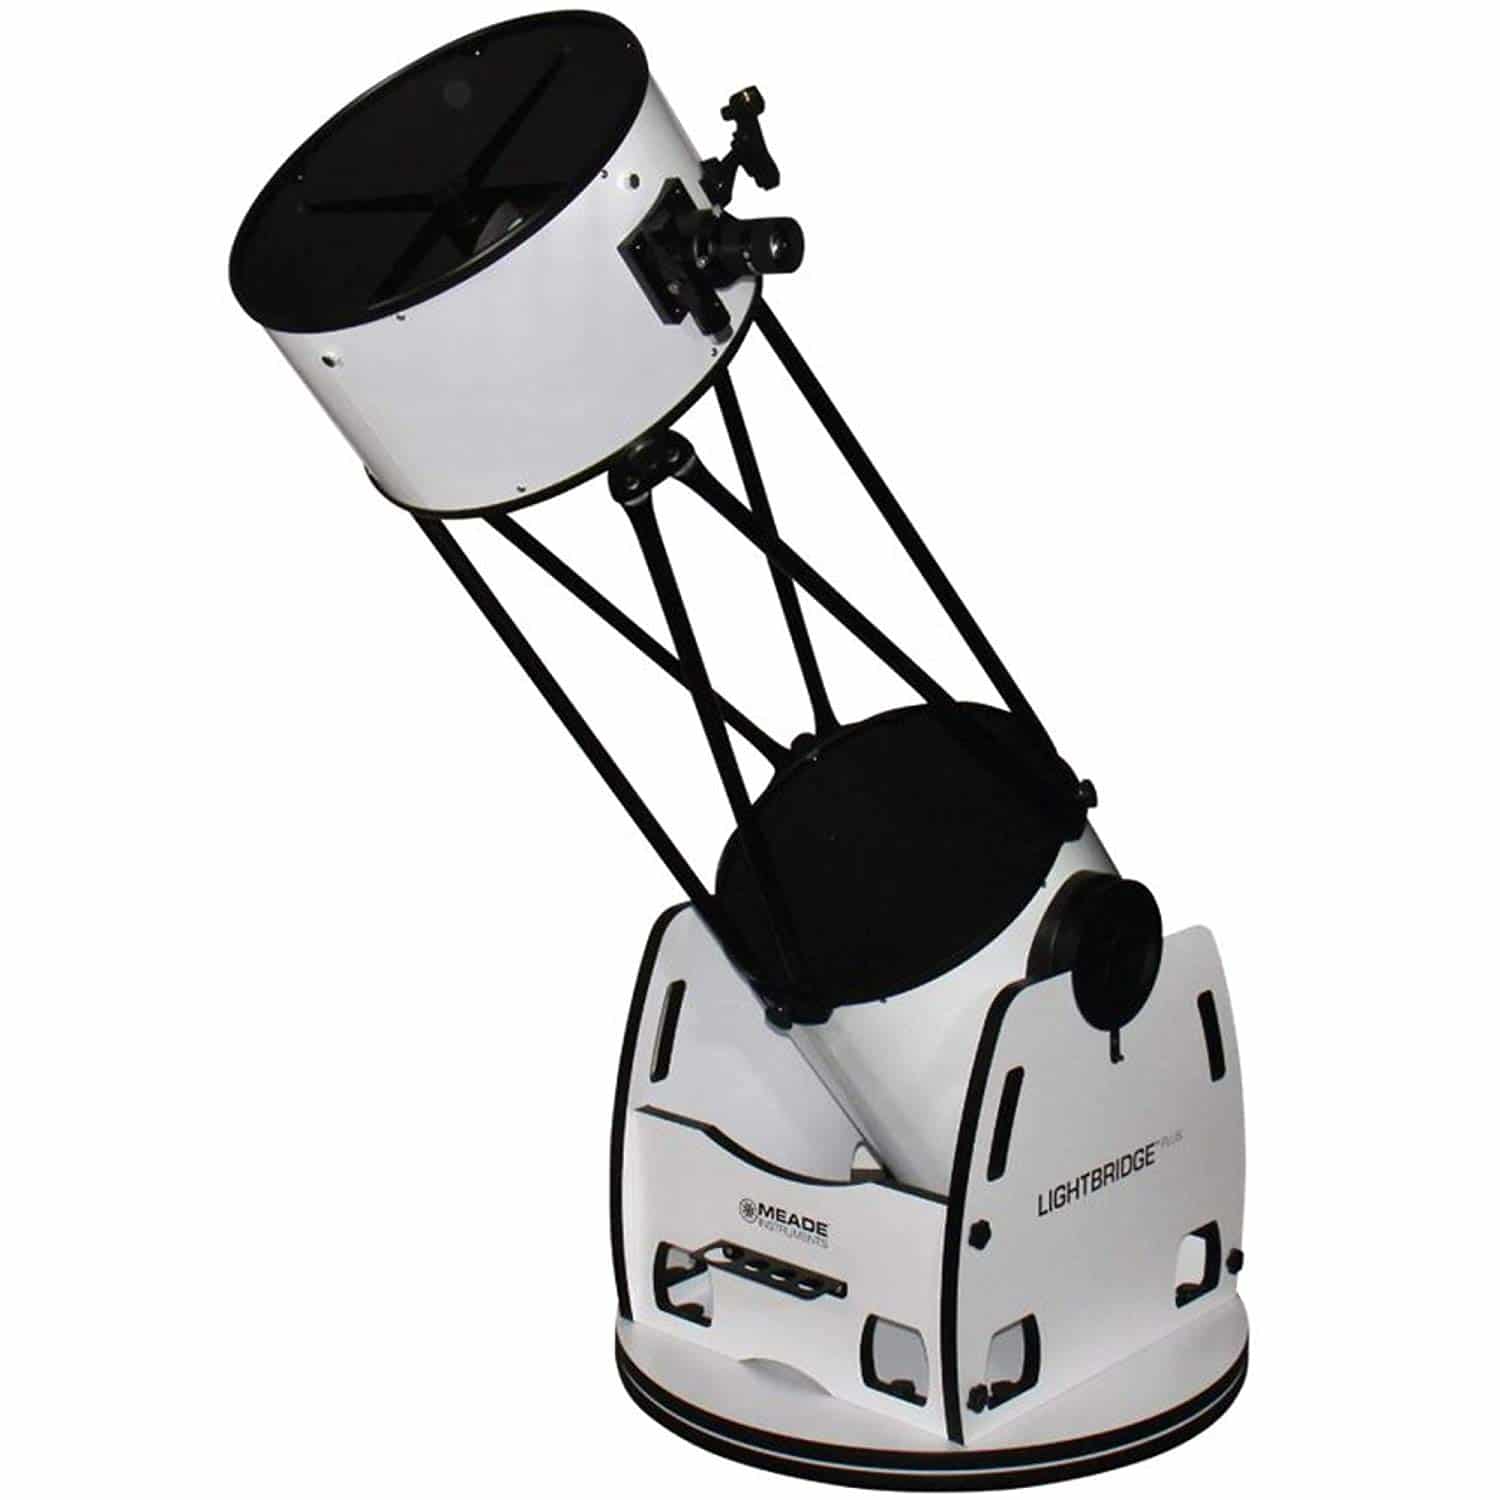 Meade Lightbridge 16 Inch Truss Tube Dobsonian Telescope Review